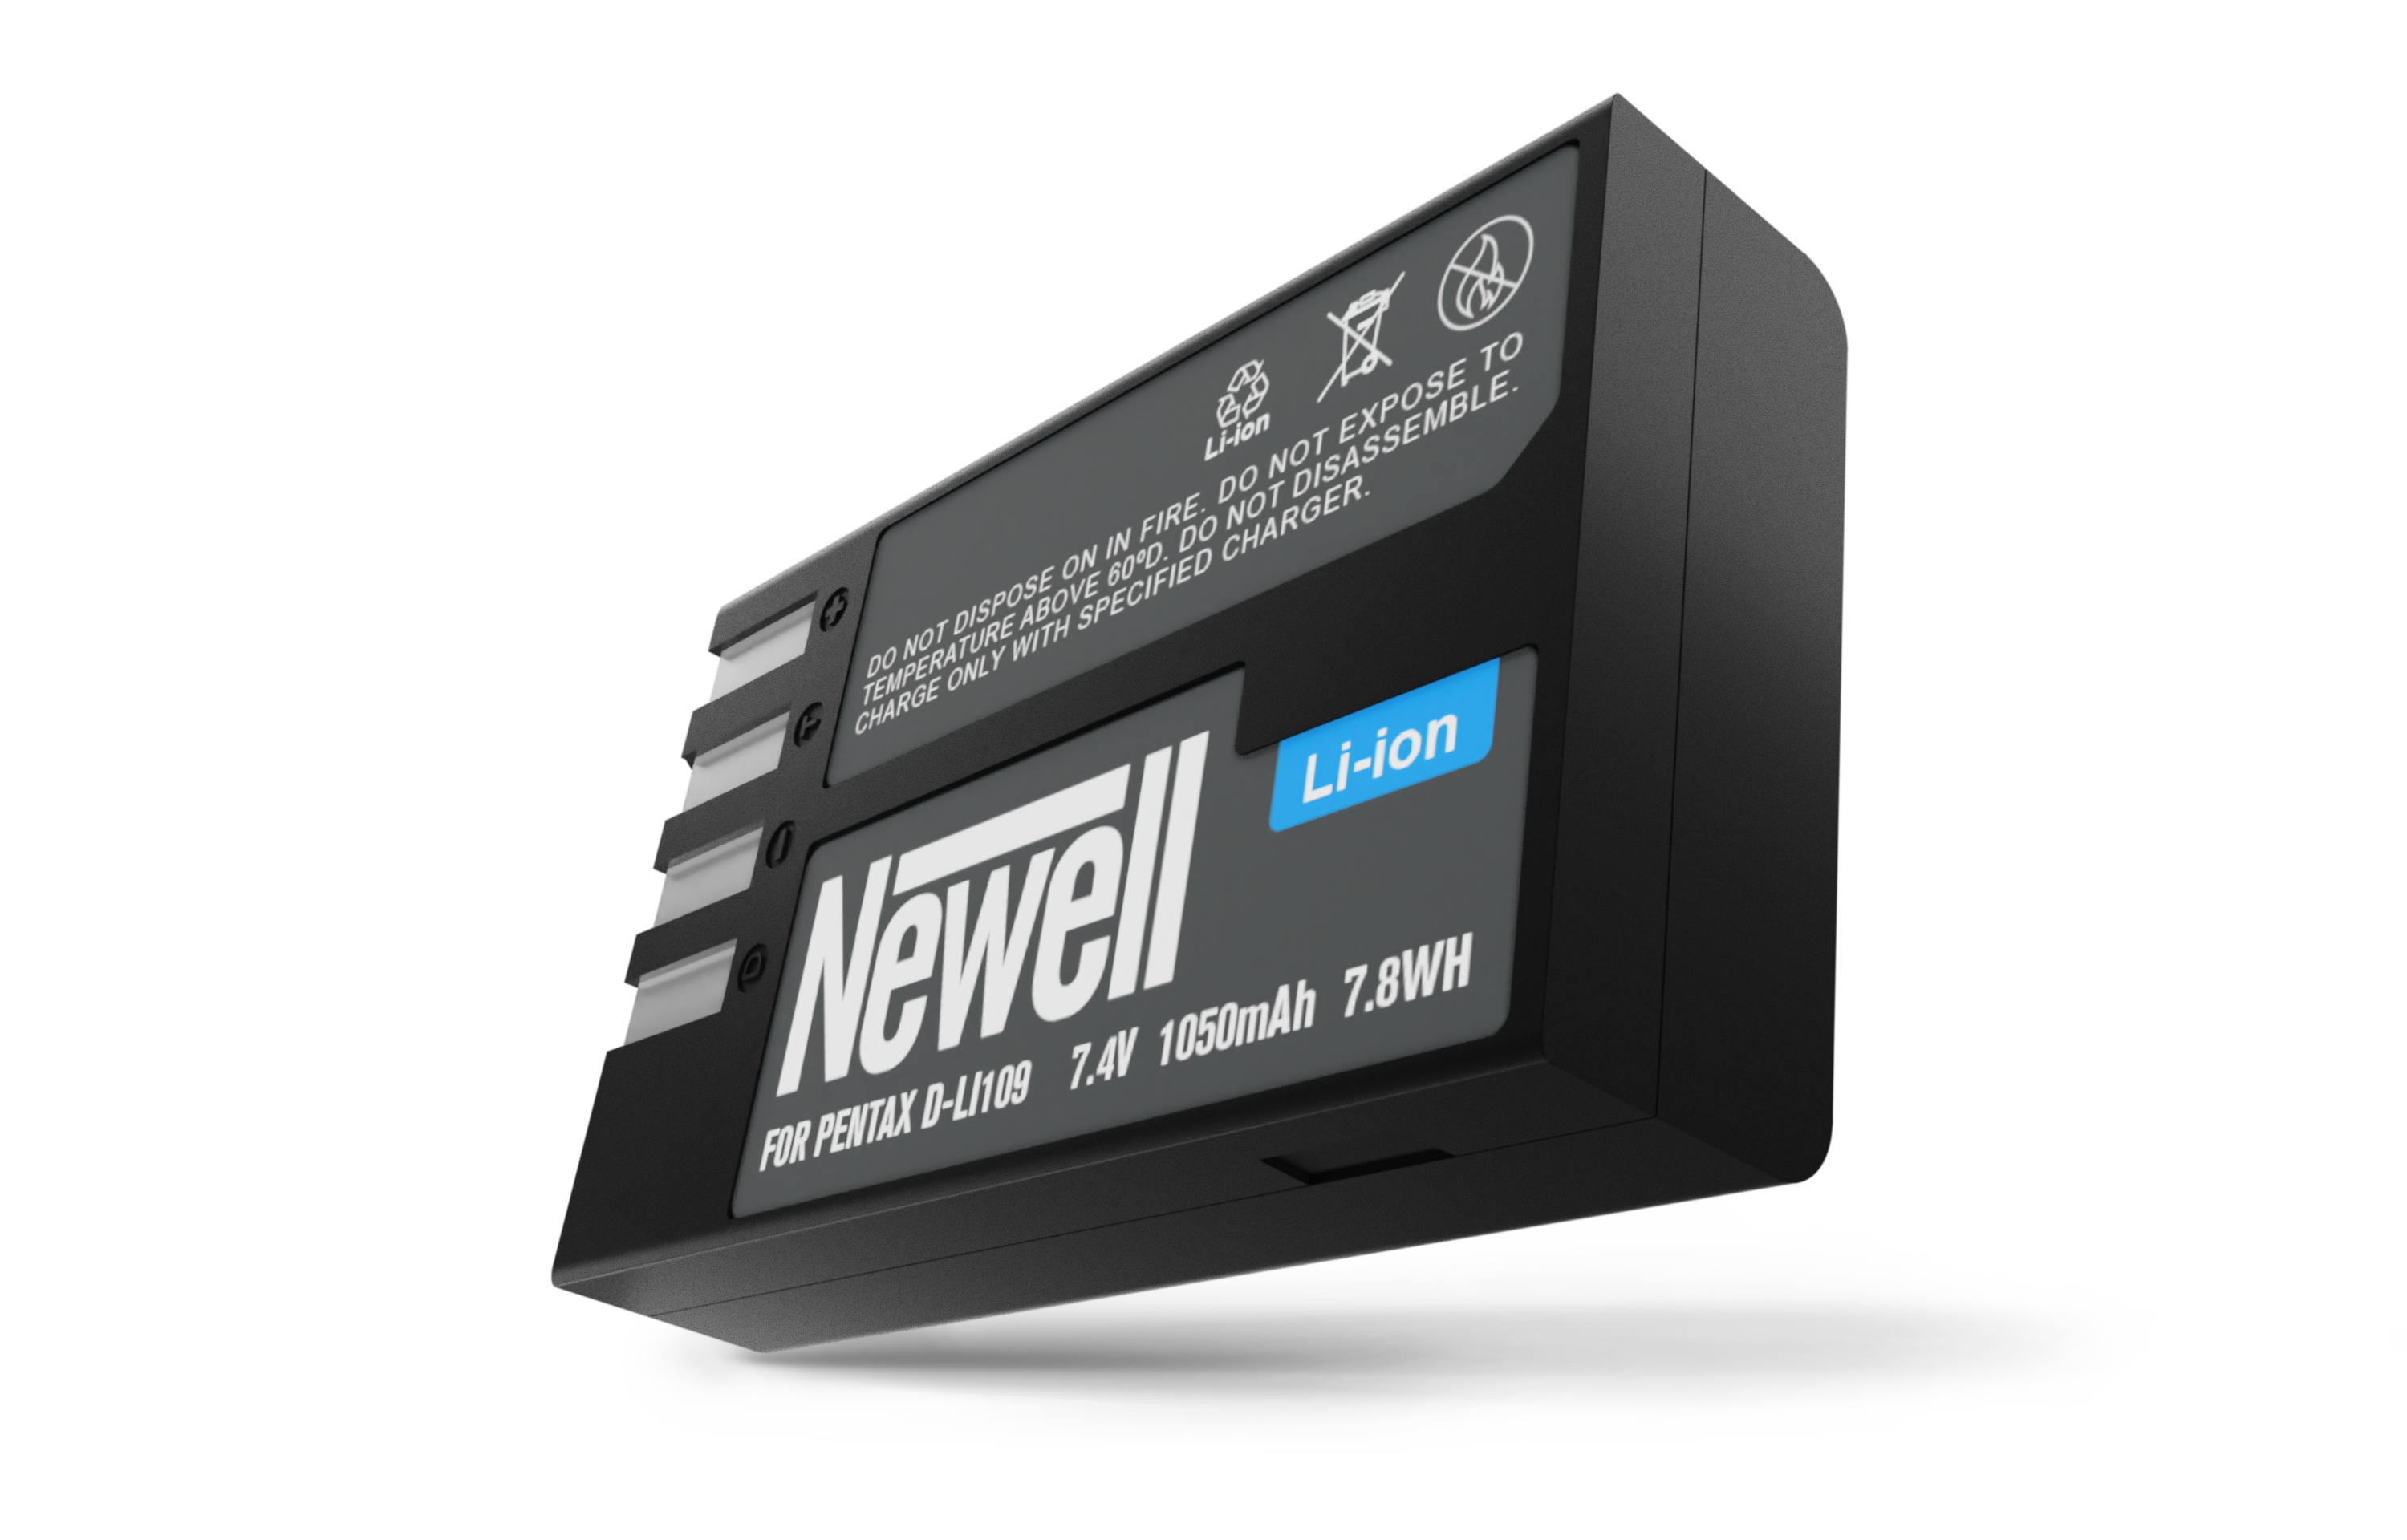 Newell rechargeable battery D-Li109